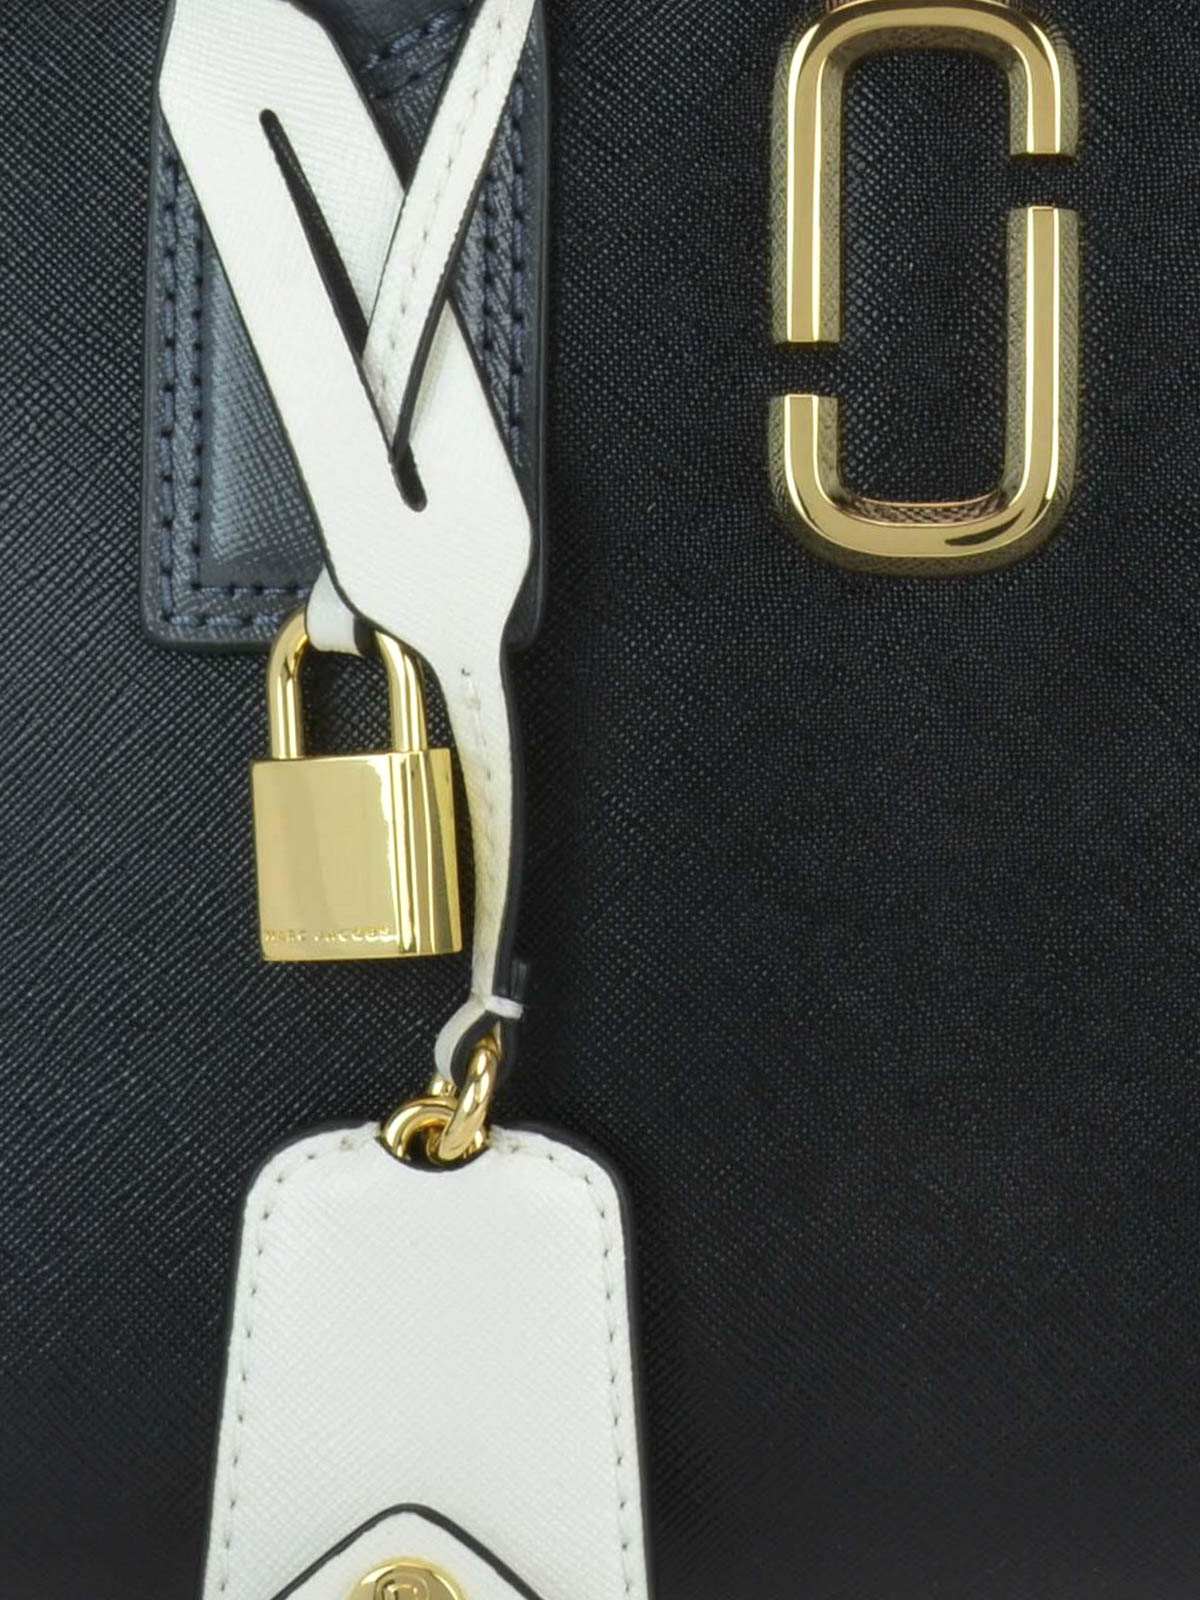 Totes bags Marc Jacobs - Big Shot DTM S black leather tote bag - M0014866001